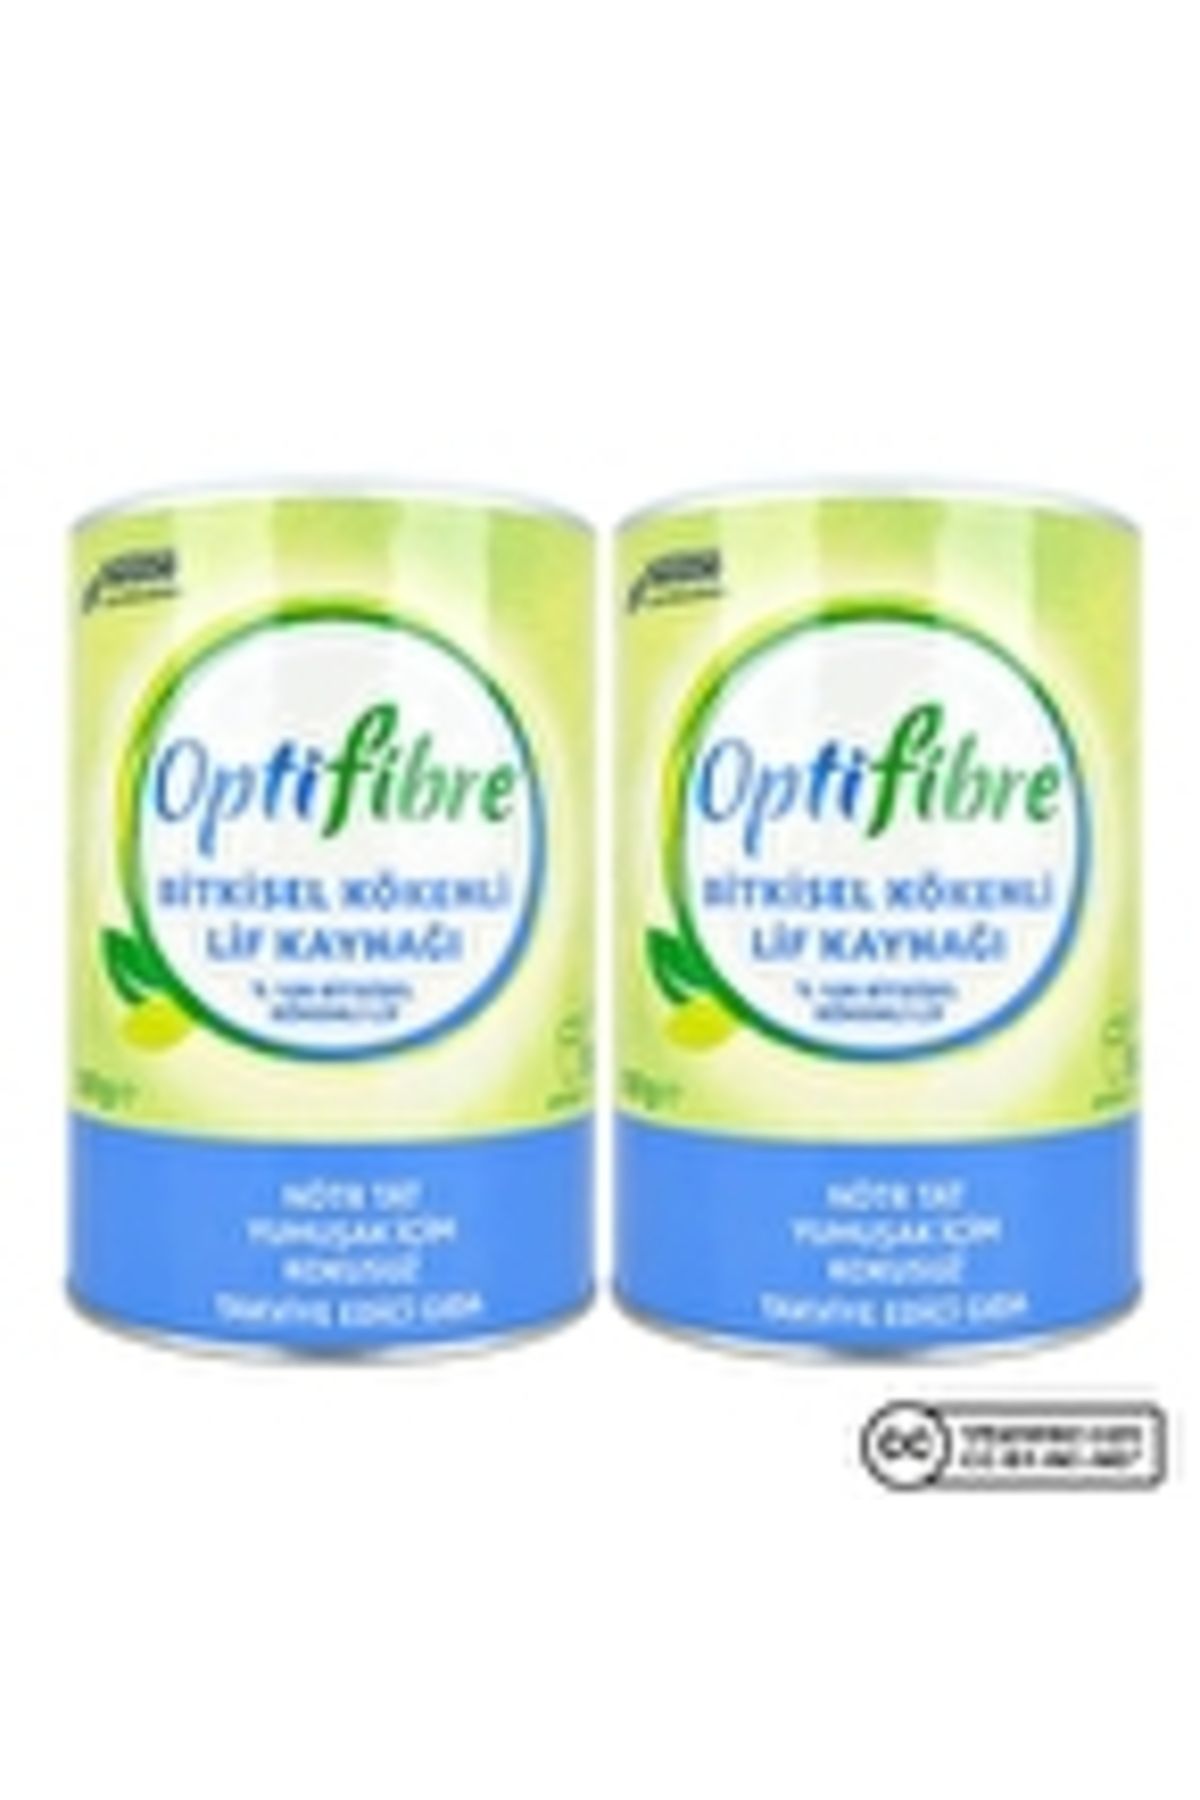 Nestle OptiFibre Bitkisel Kökenli Lif Kaynağı 250 Gr 2 Adet ( 1 ADET )